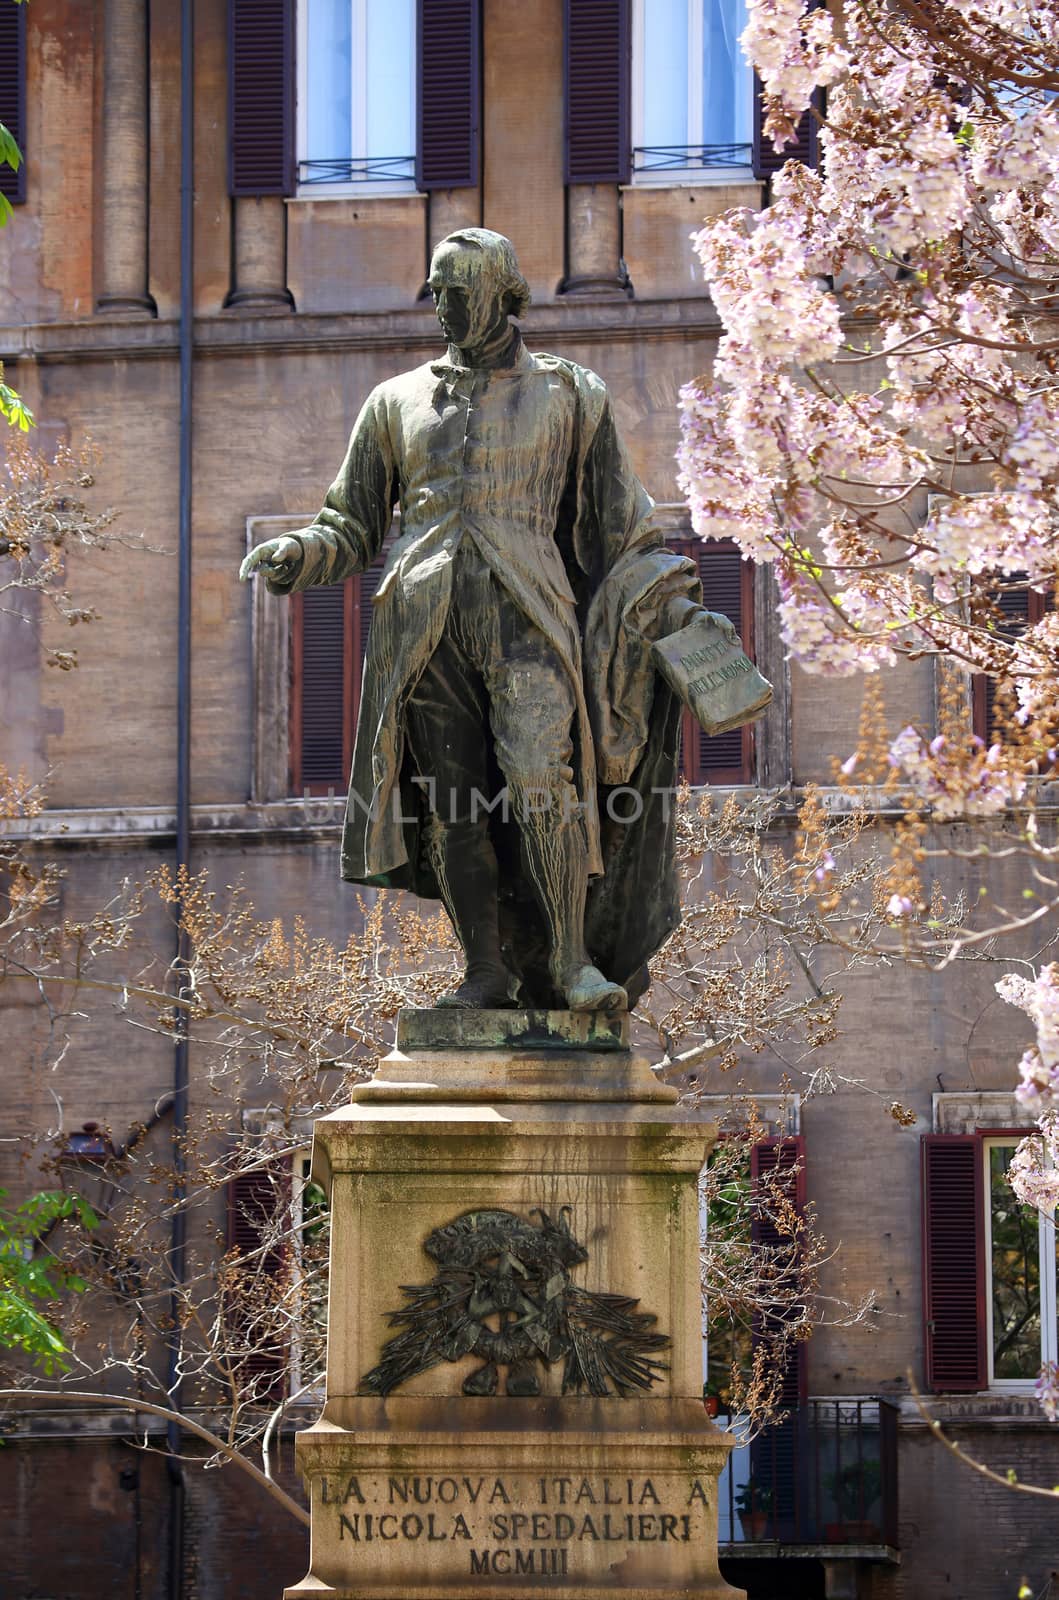 Statue of the philosopher Nicola Spedalieri MCMIII in Rome, Ital by vladacanon